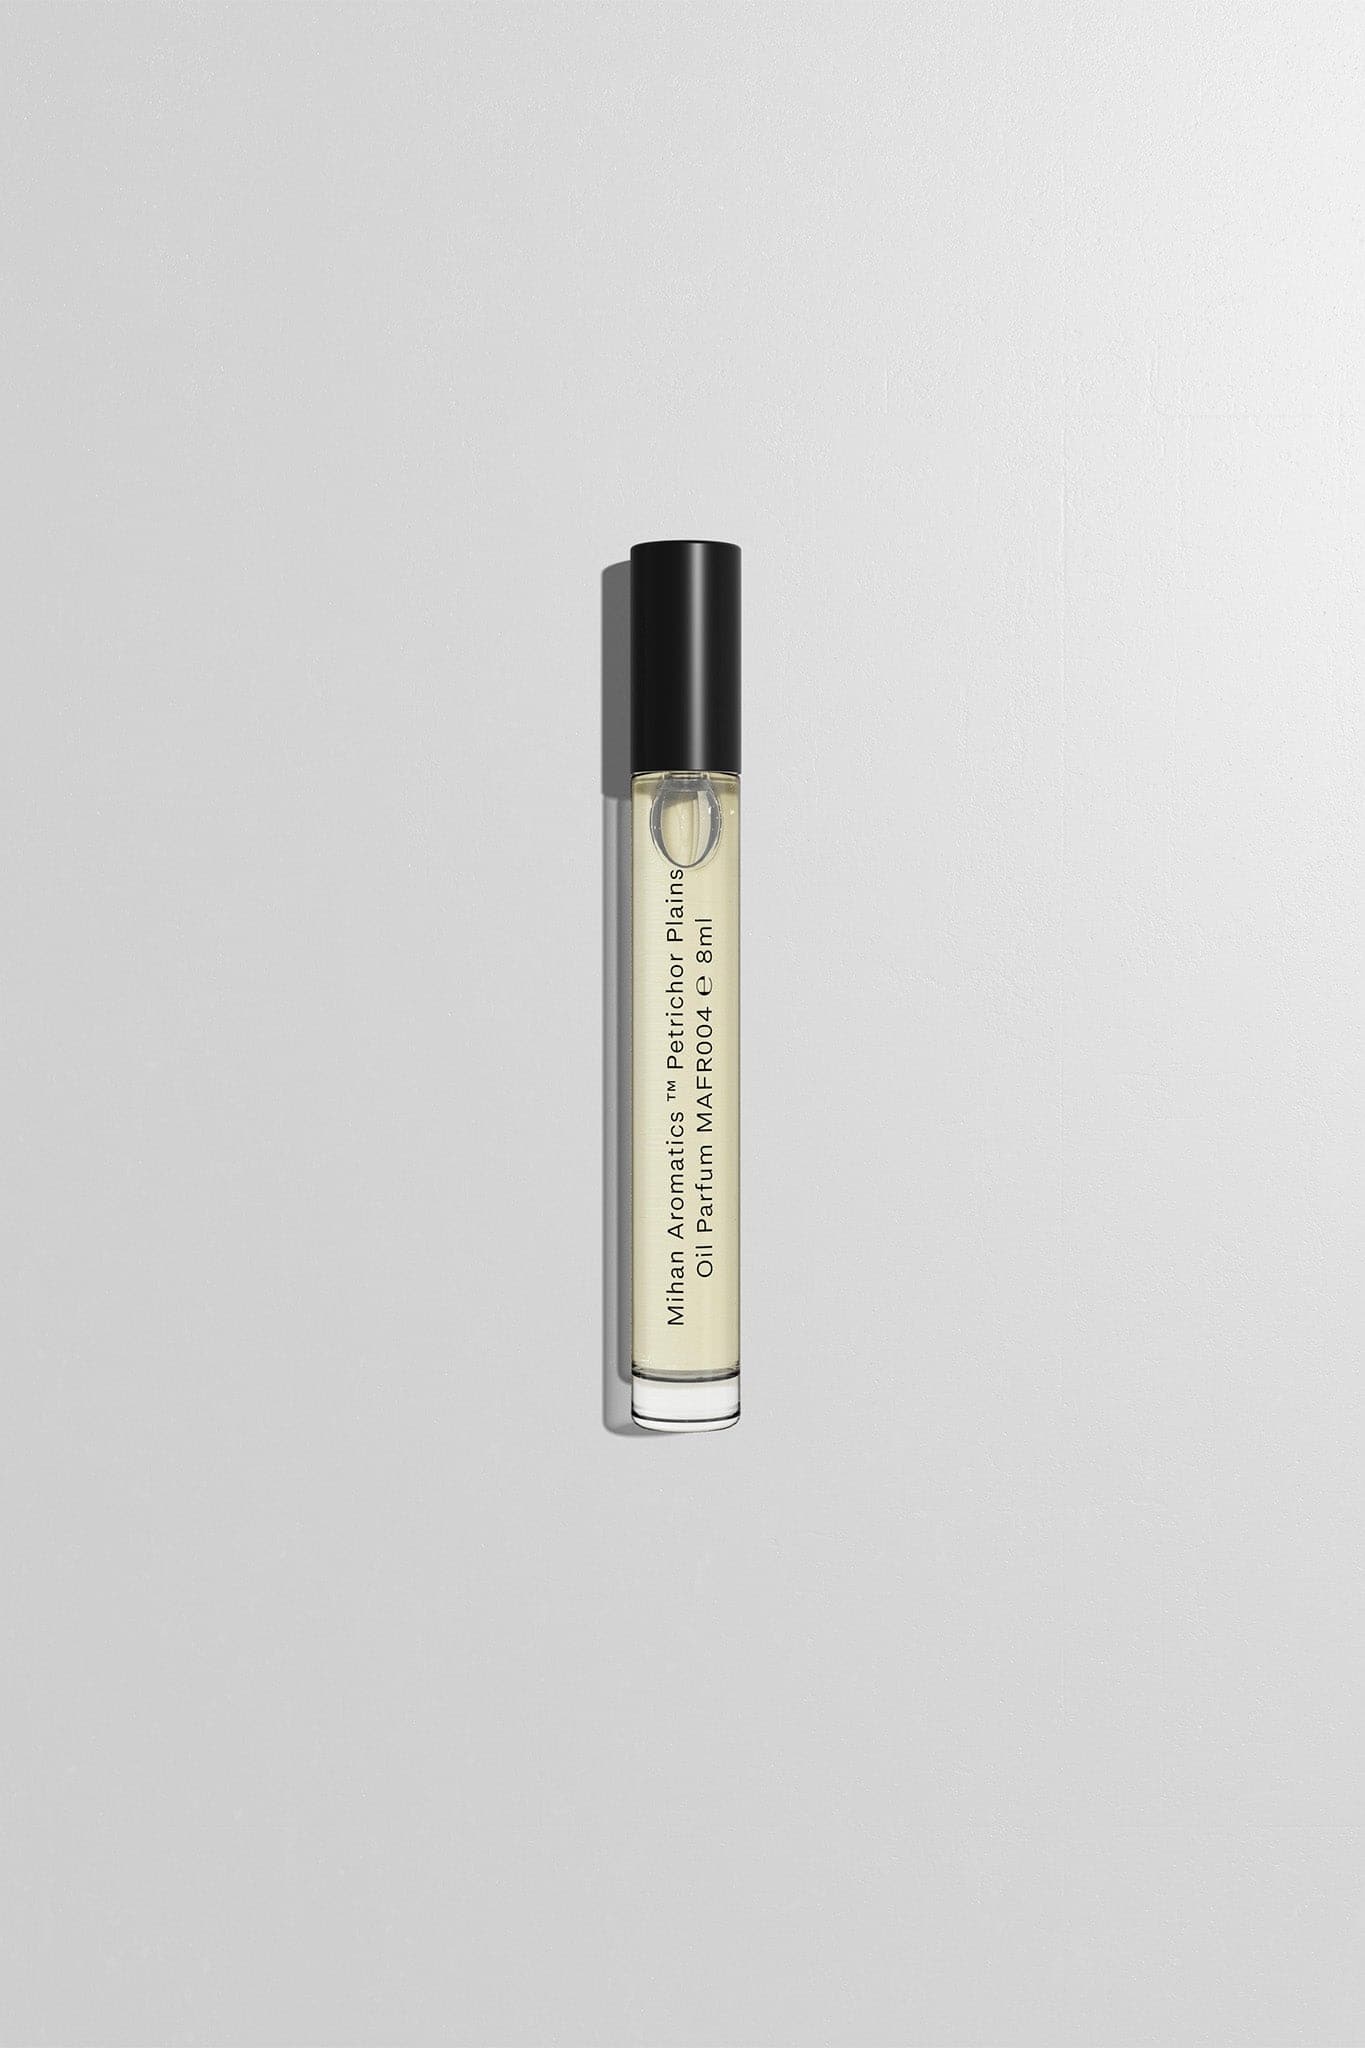 Mihan Aromatics - Petrichor Plains Parfum - Marz Designs AUMihan Aromatics